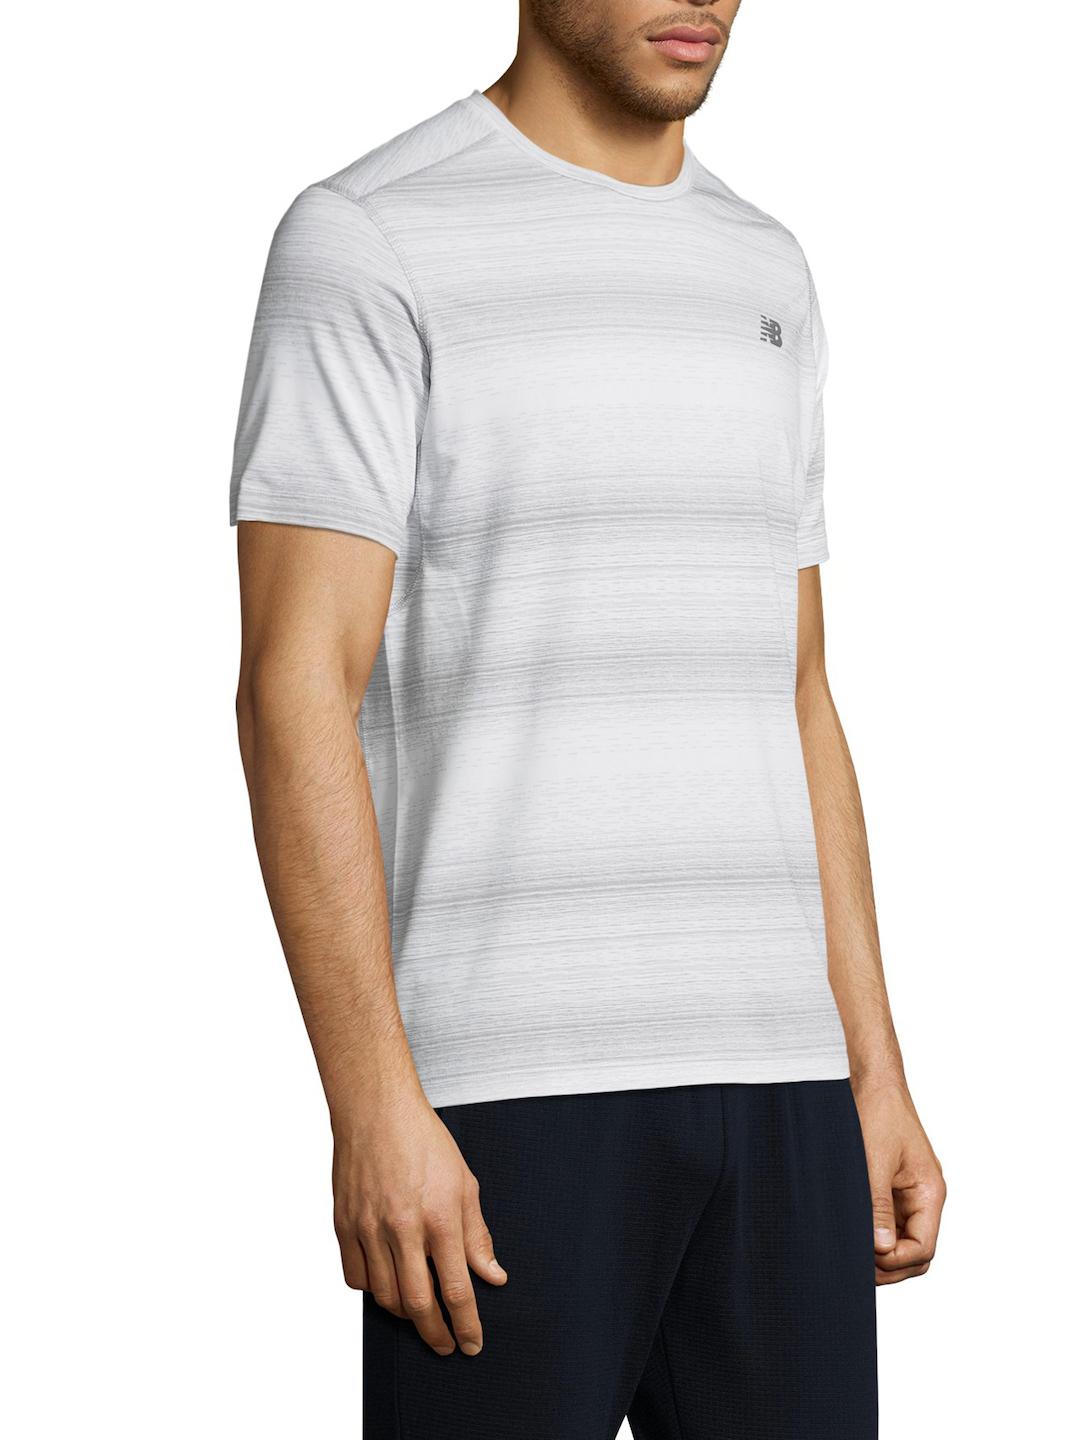 New Balance Synthetic Kairosport Striped Tee in Grey/White (White) for Men  - Lyst